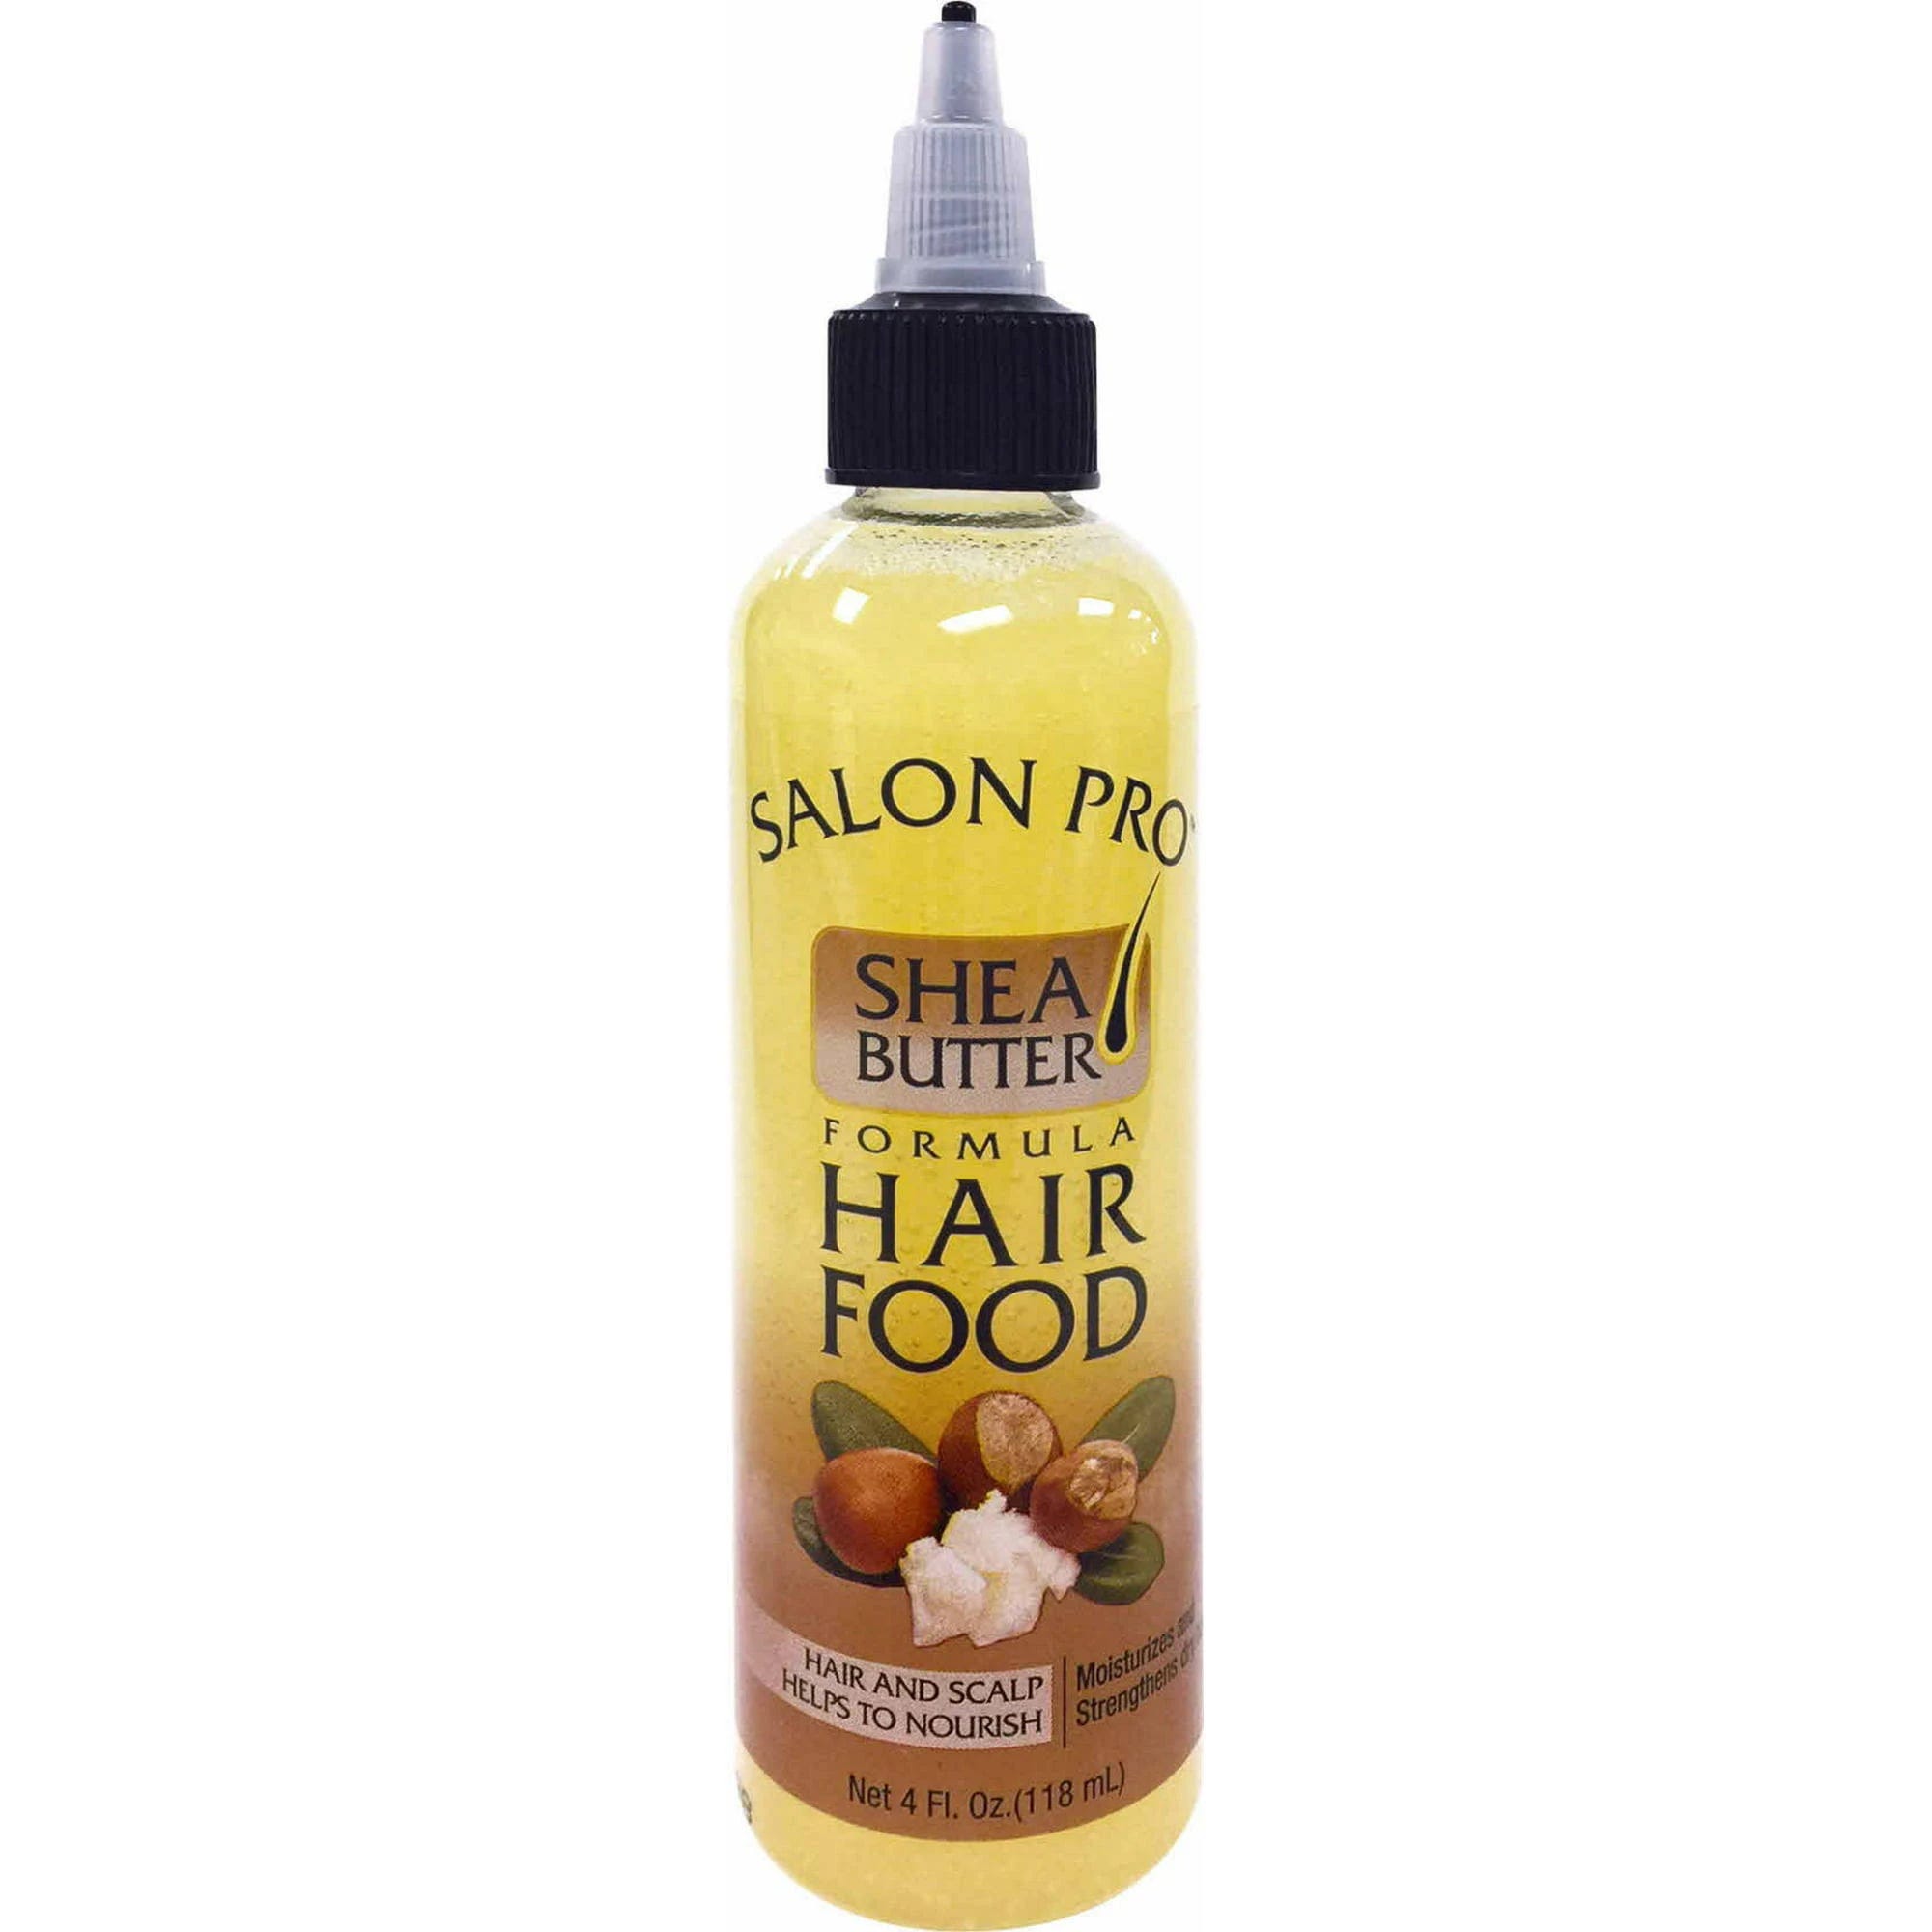 Salon Pro Shea Butter Hair Food: Strengthening Oil for All Hair Types | Image